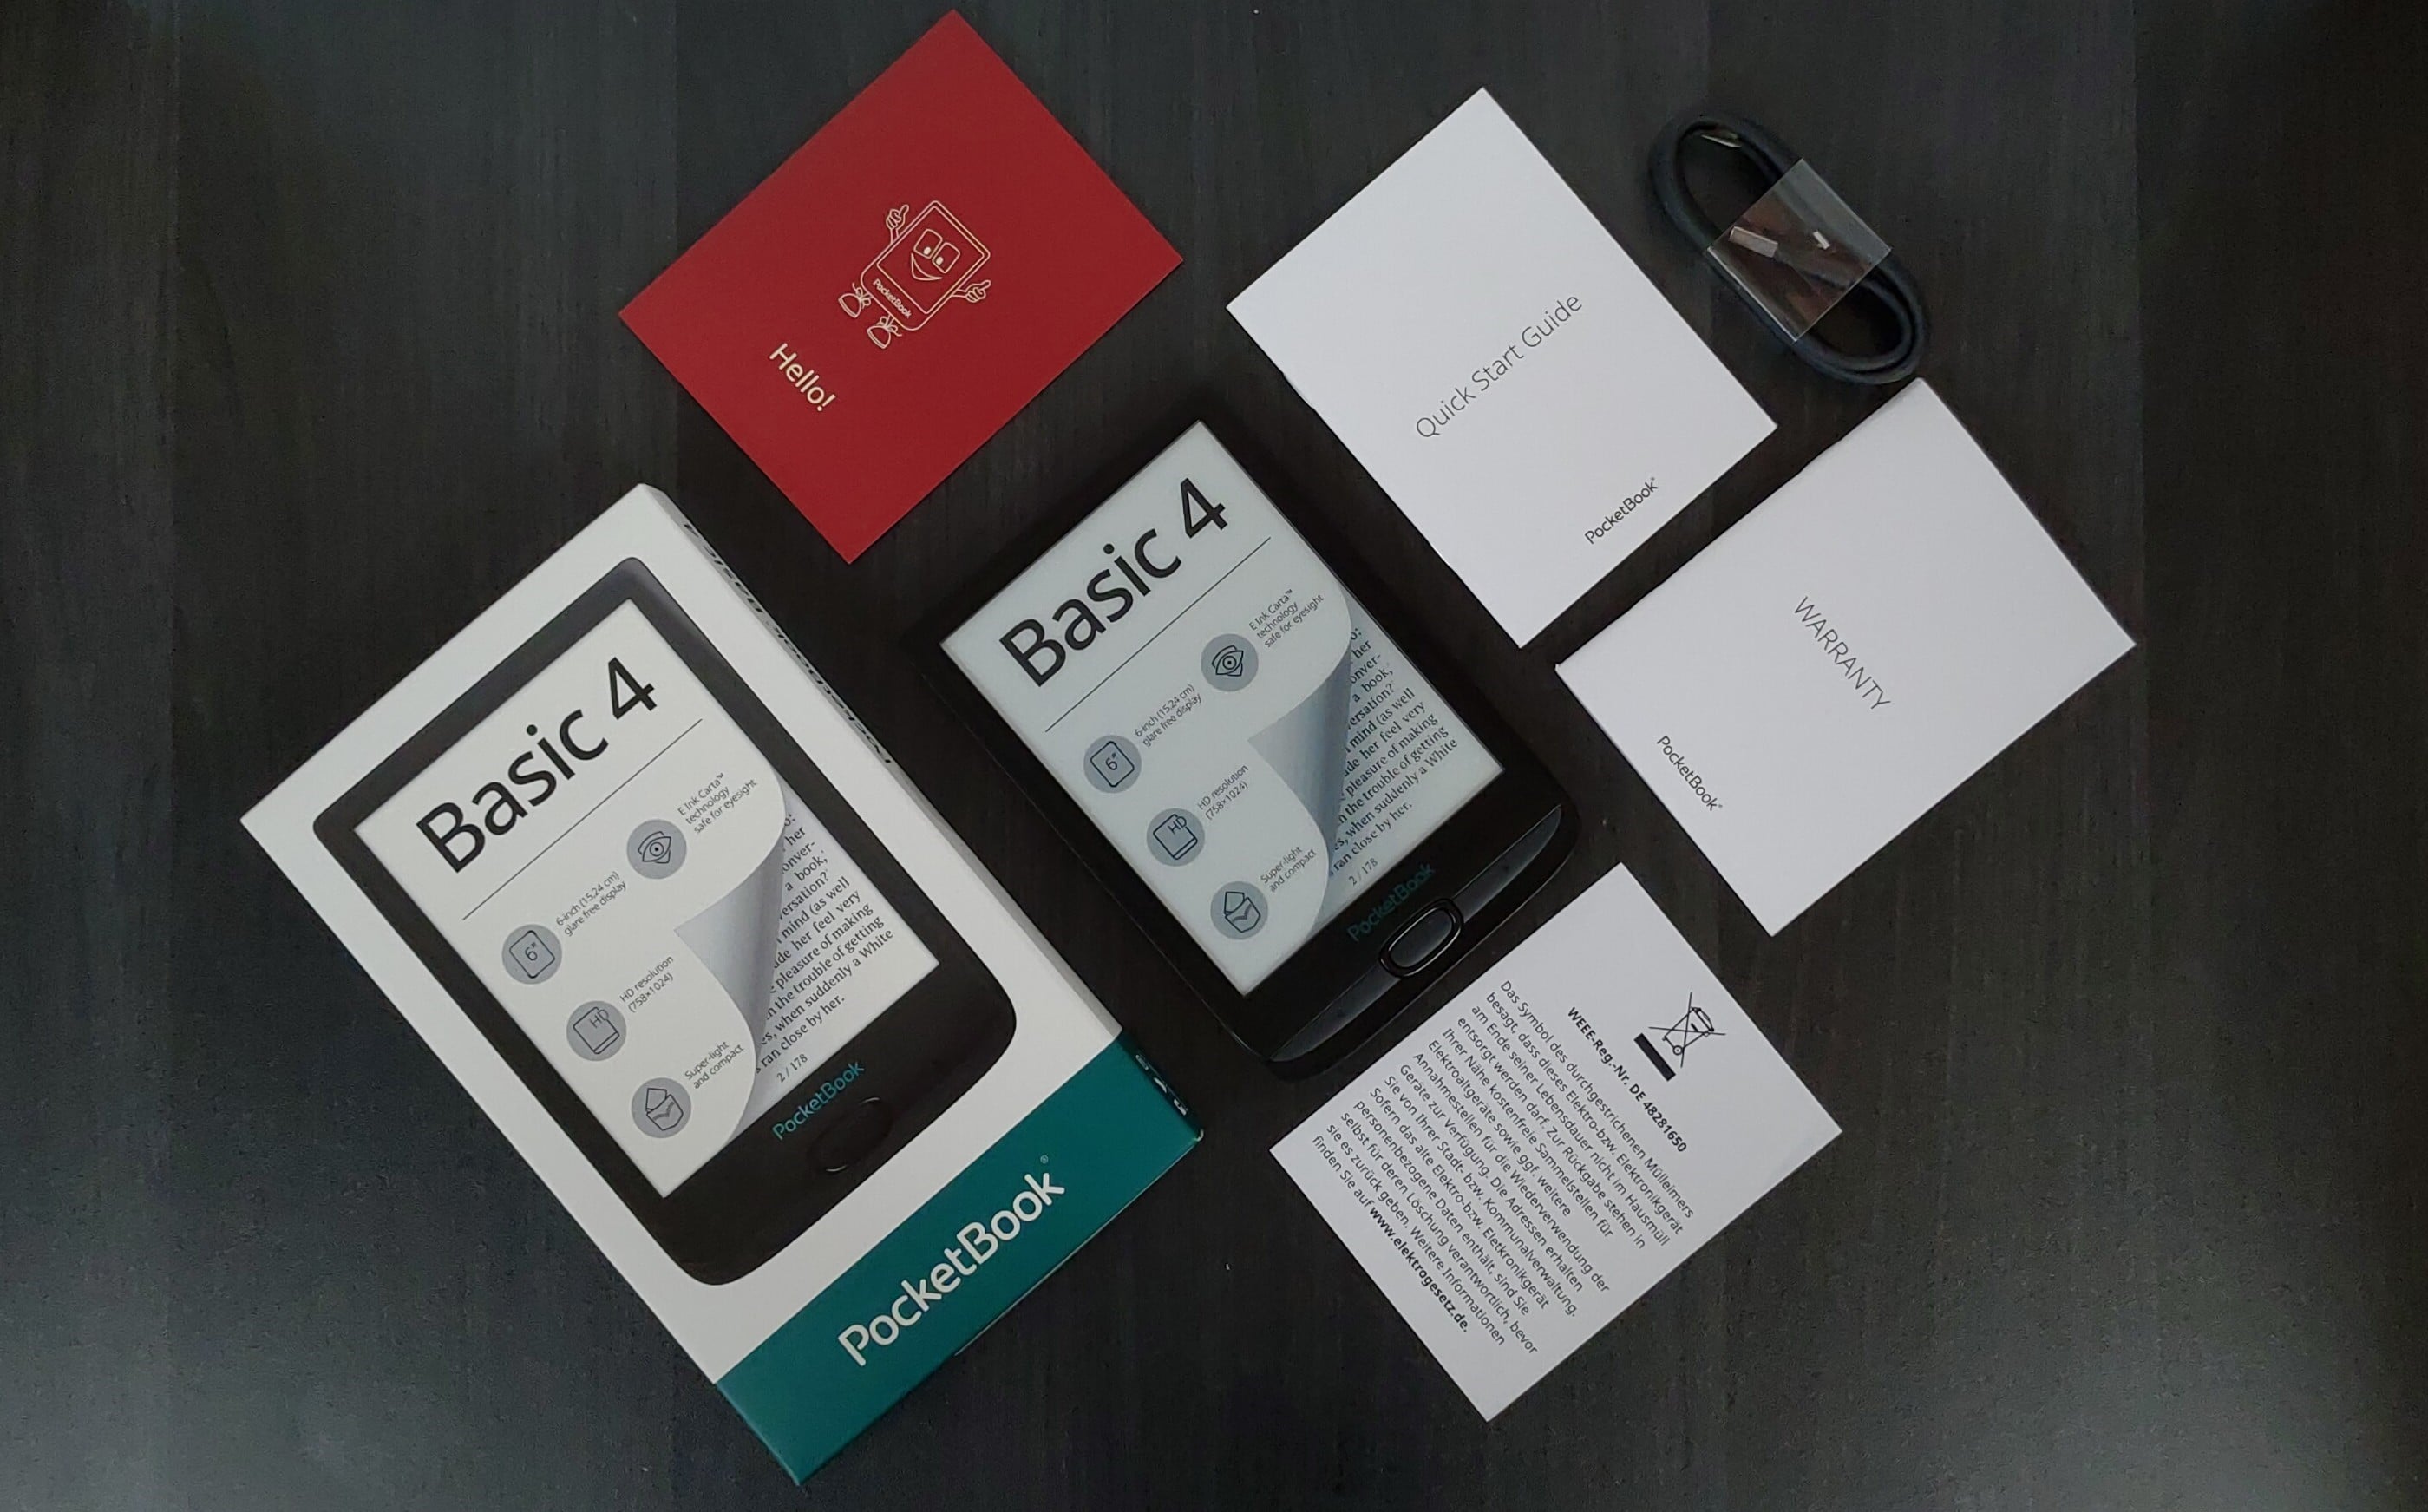 Unboxing the Pocketbook Basic 4 e-reader image